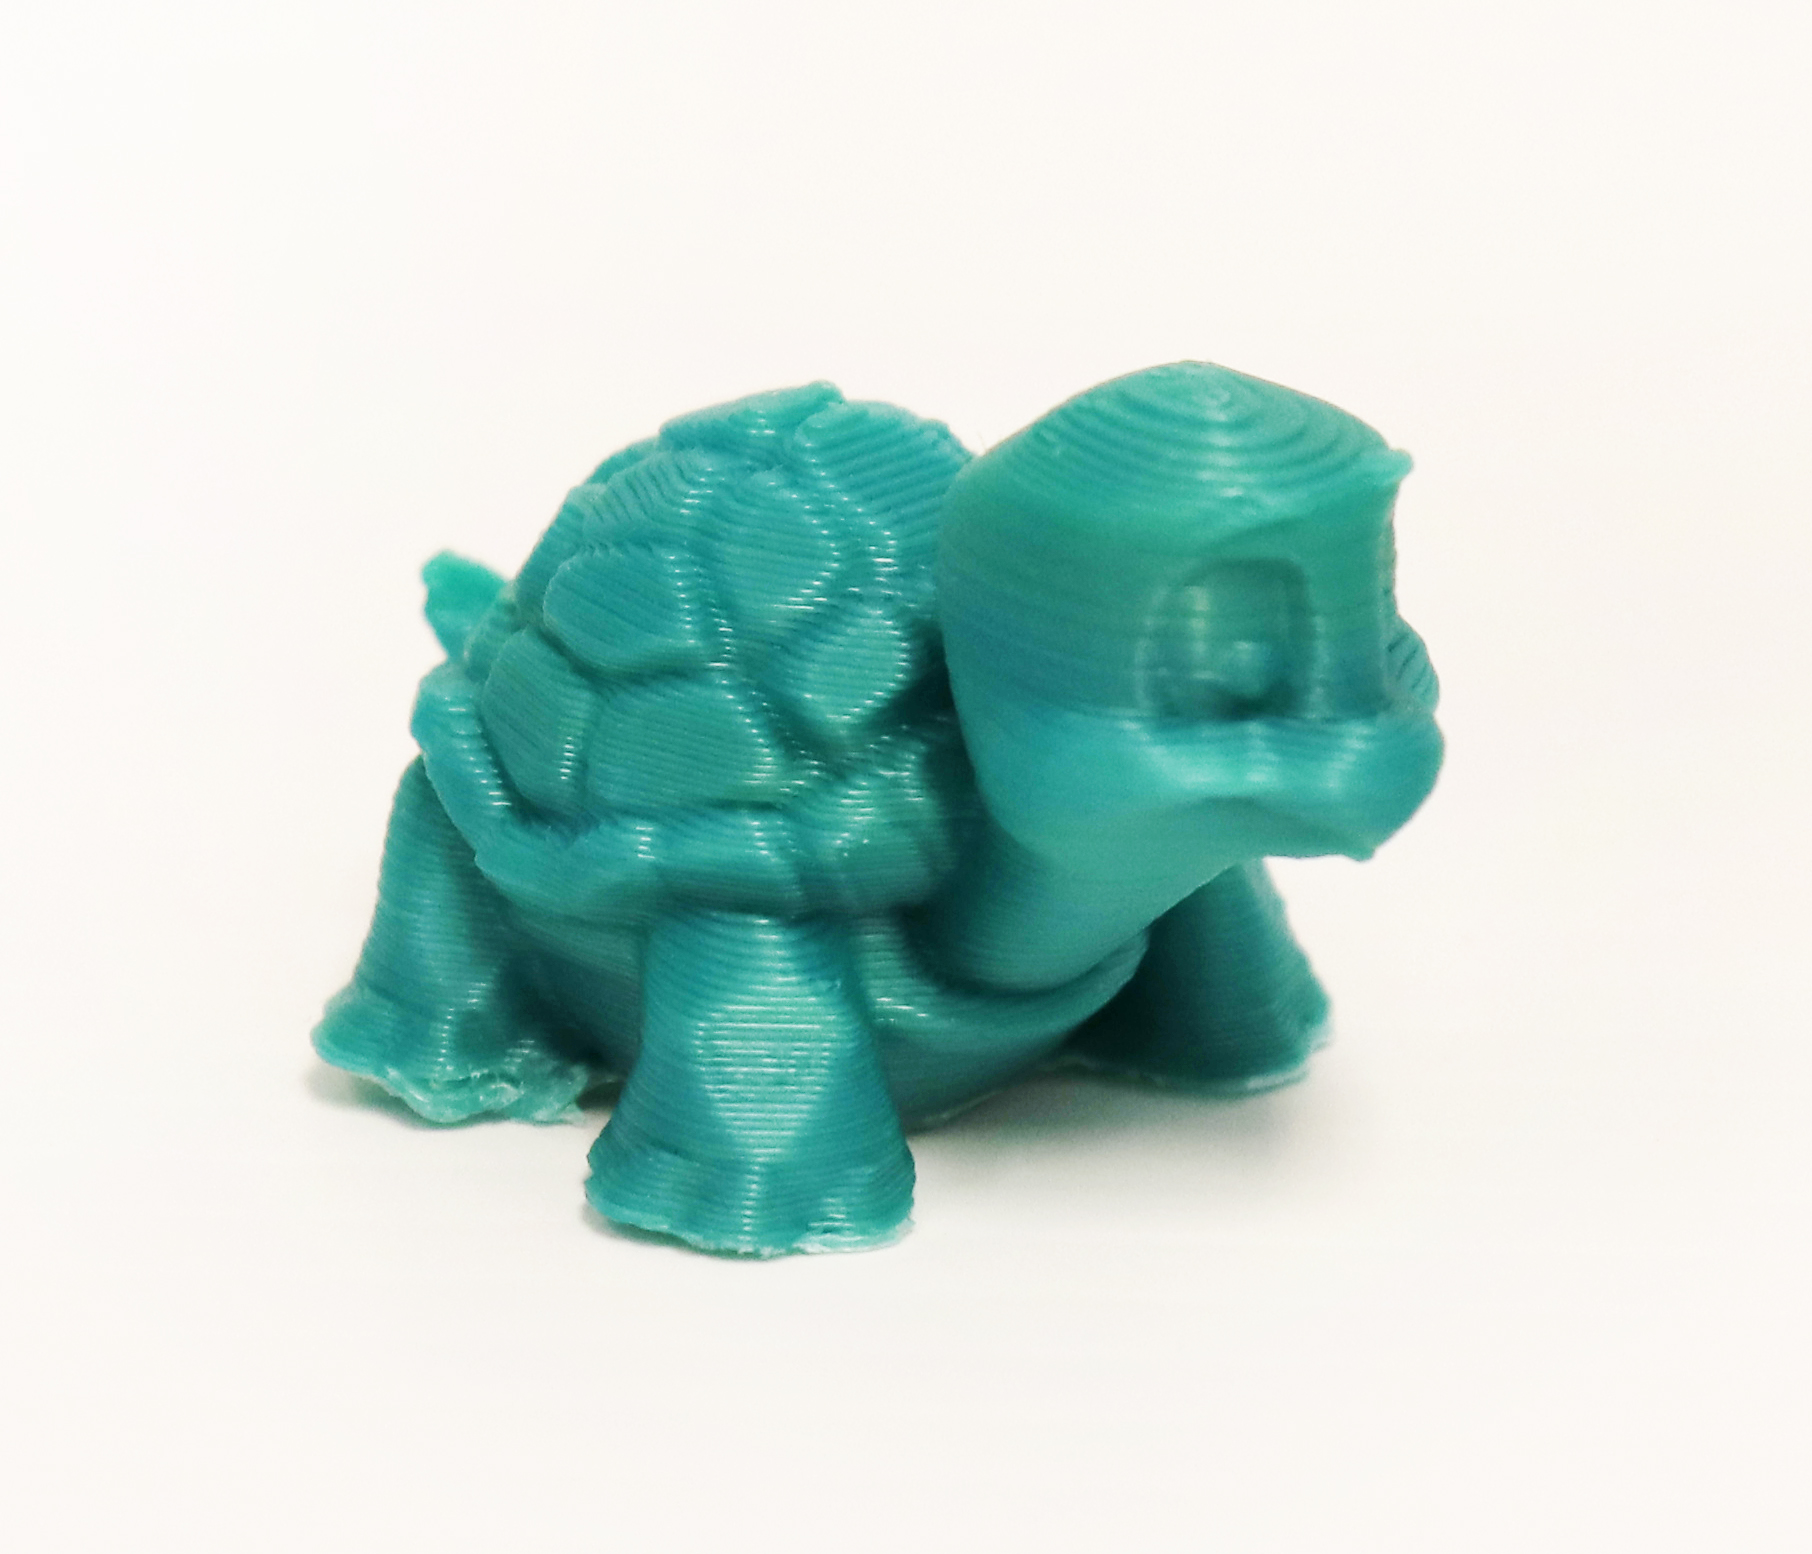 A green 3D printed cartoon turtle.